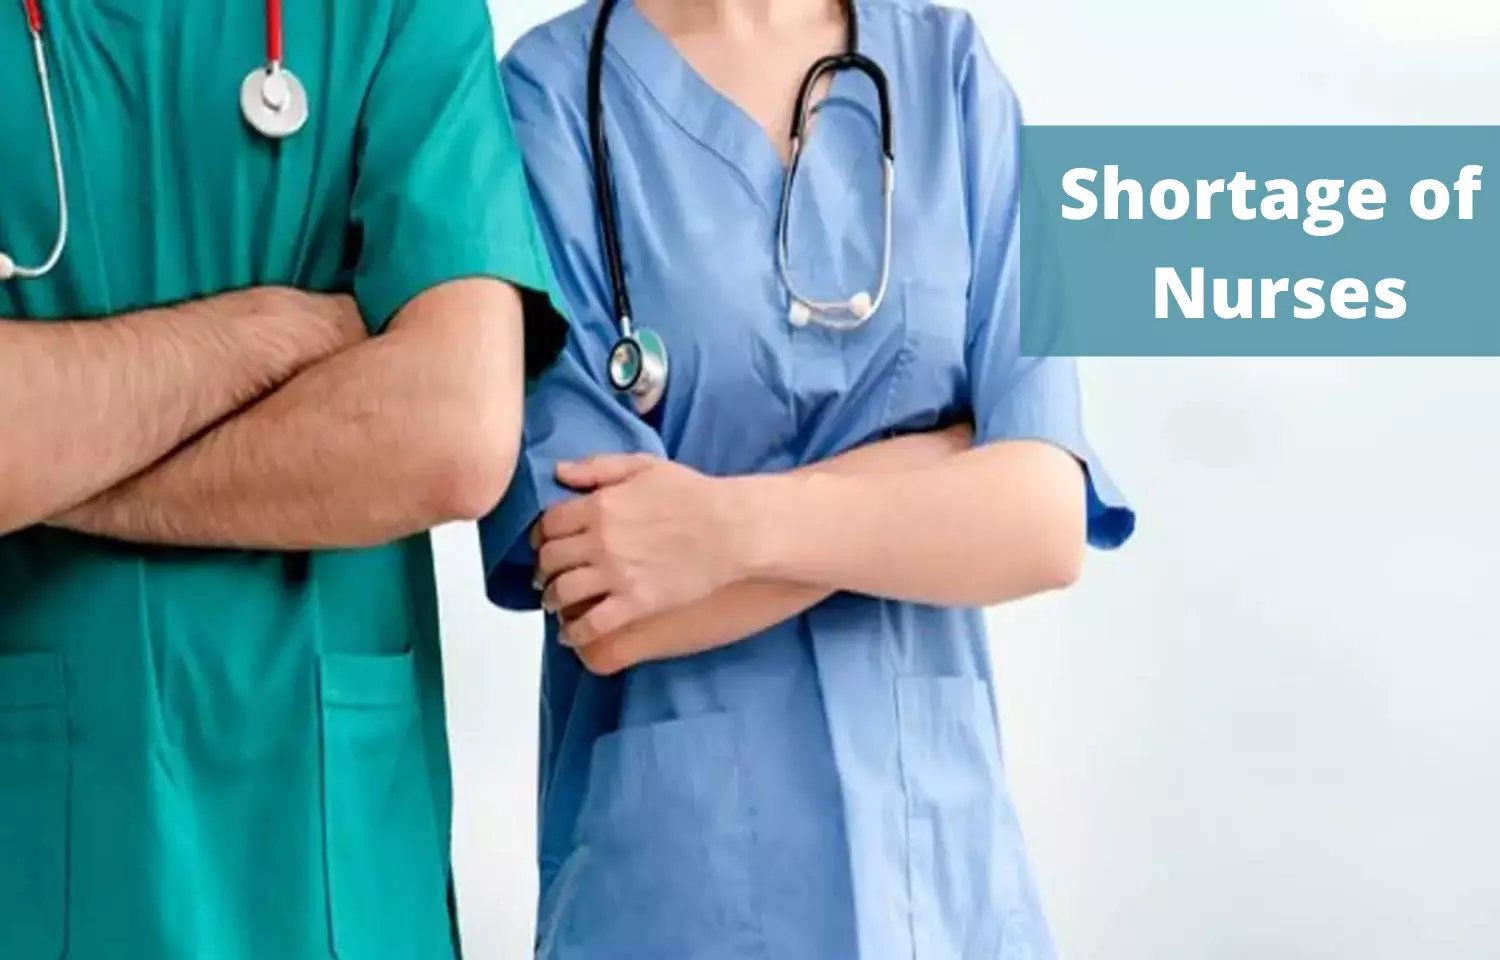 Shortage of 4.3 million nurses in India: Experts